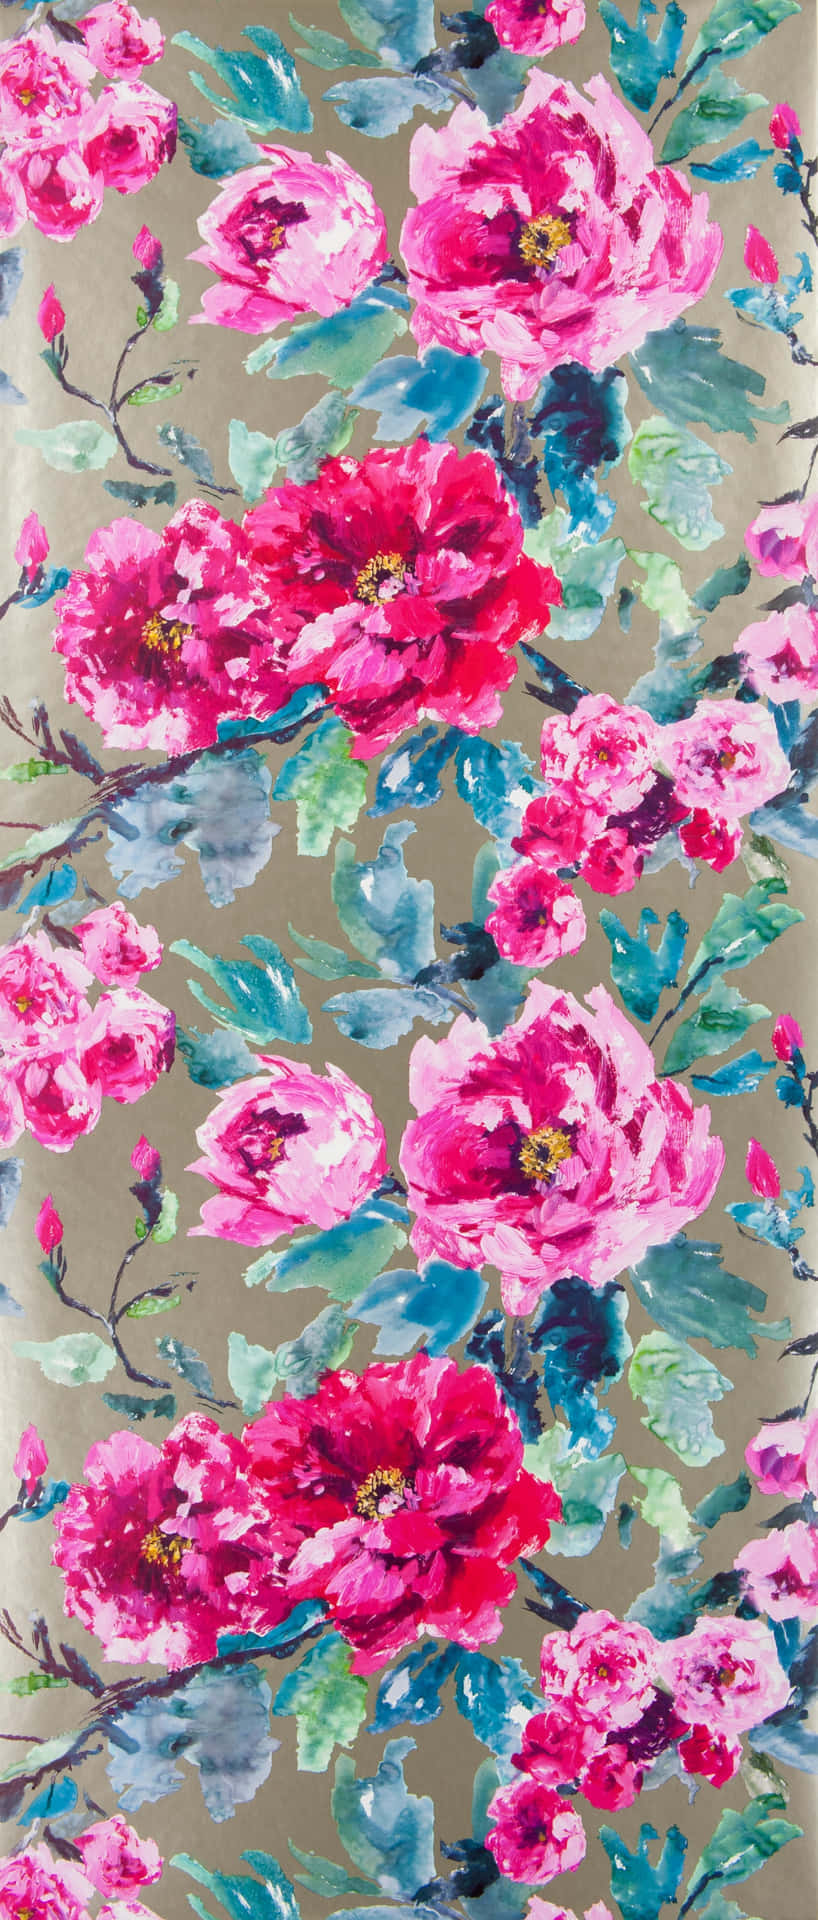 Vibrant Floral Art Explosion Wallpaper